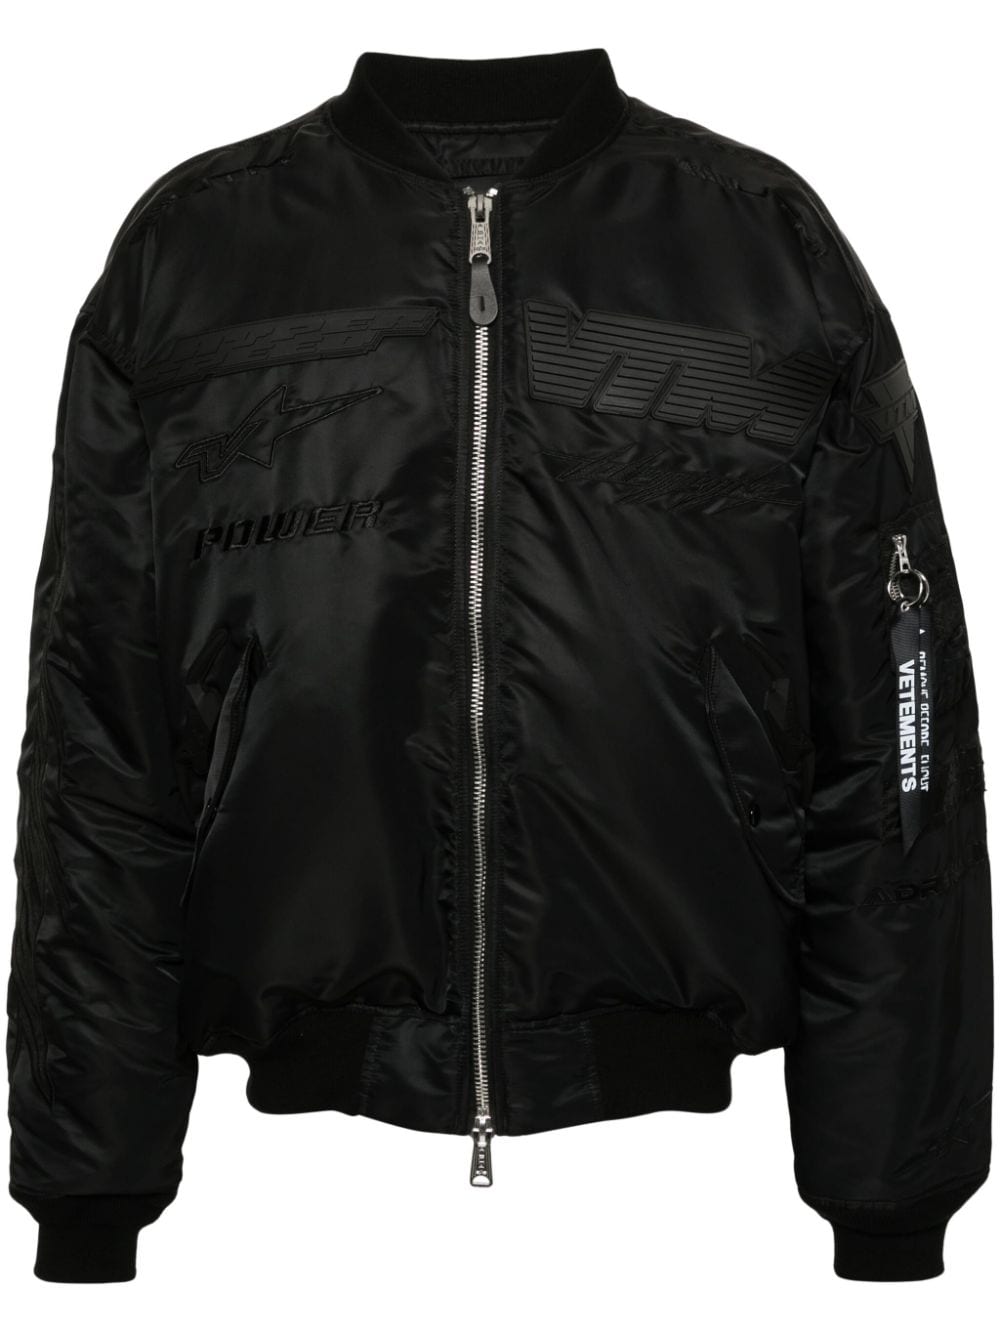 Blackout Racing bomber jacket